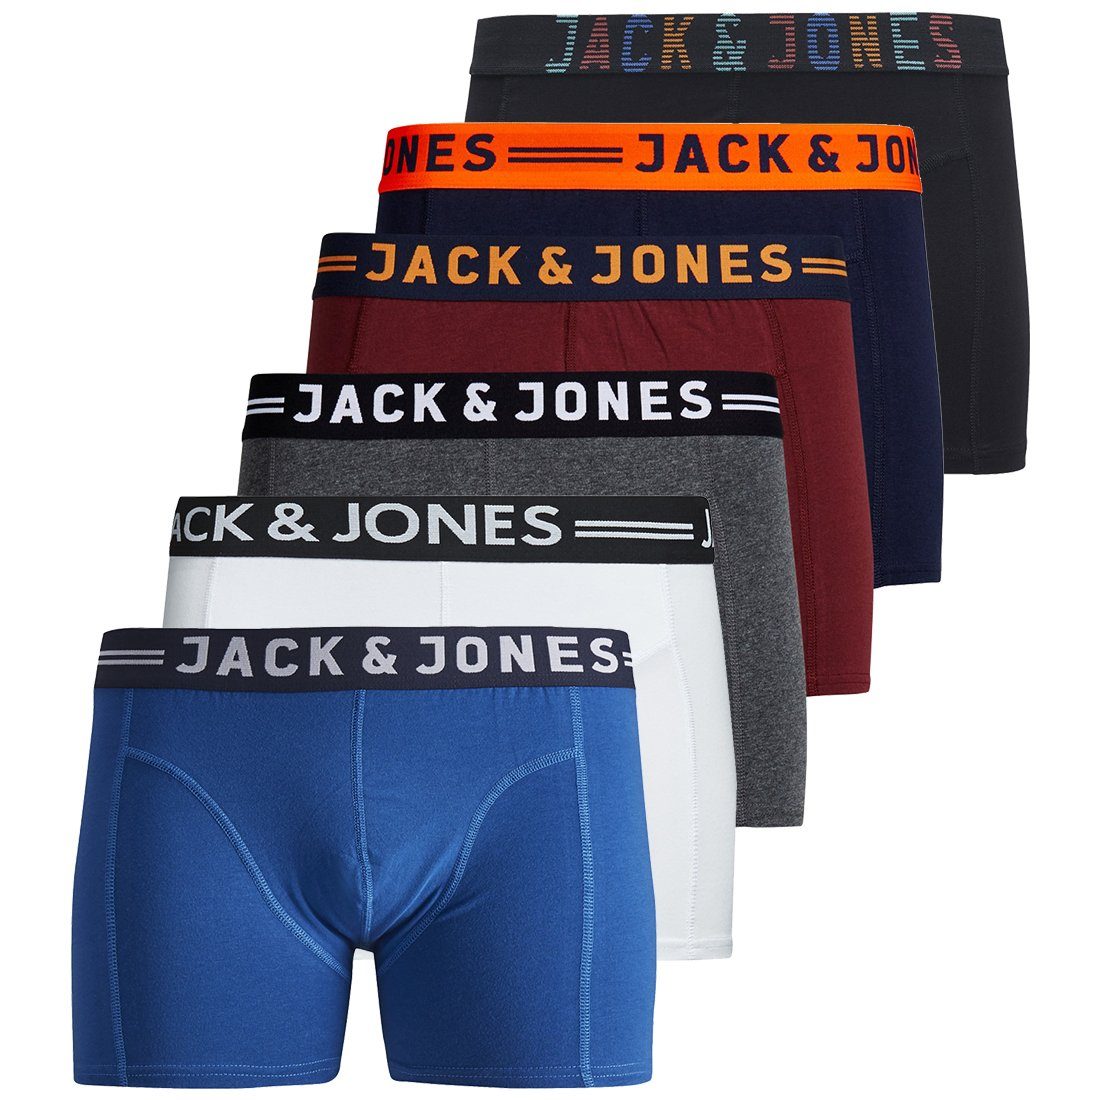 JACK & JONES Jack Unterhose Männer 6er M Mehrfarbig4 Marke Jones Short XL Boxershorts L S Herren Pack XXL Boxershorts